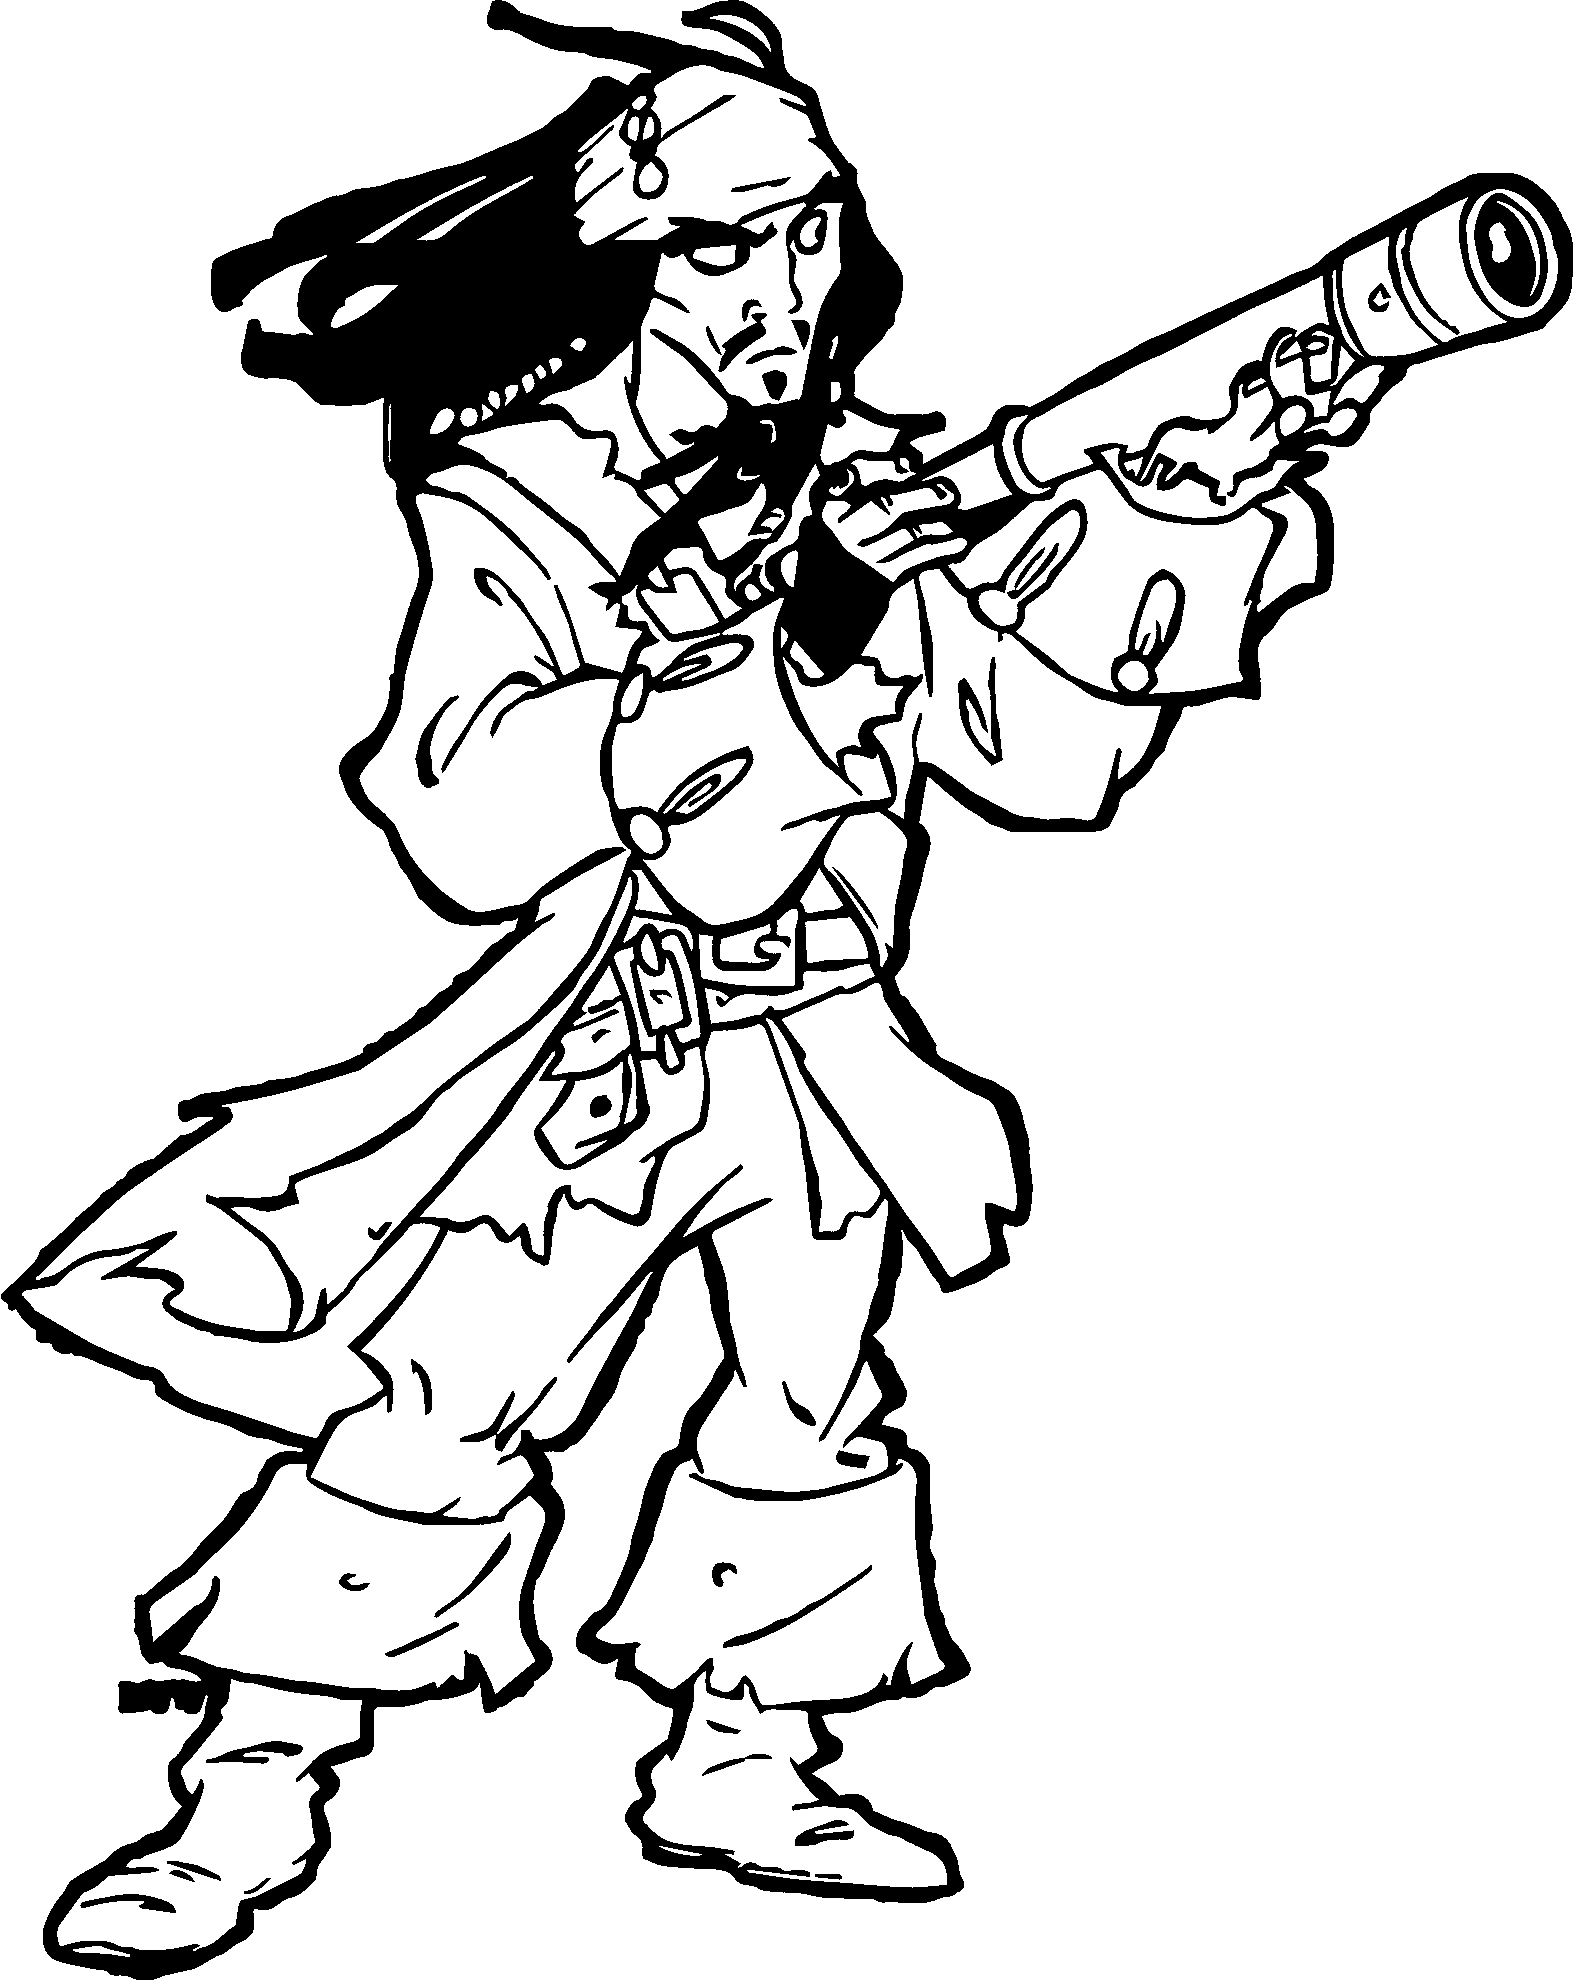 Skeleton Jack Sparrow Image Coloring Page